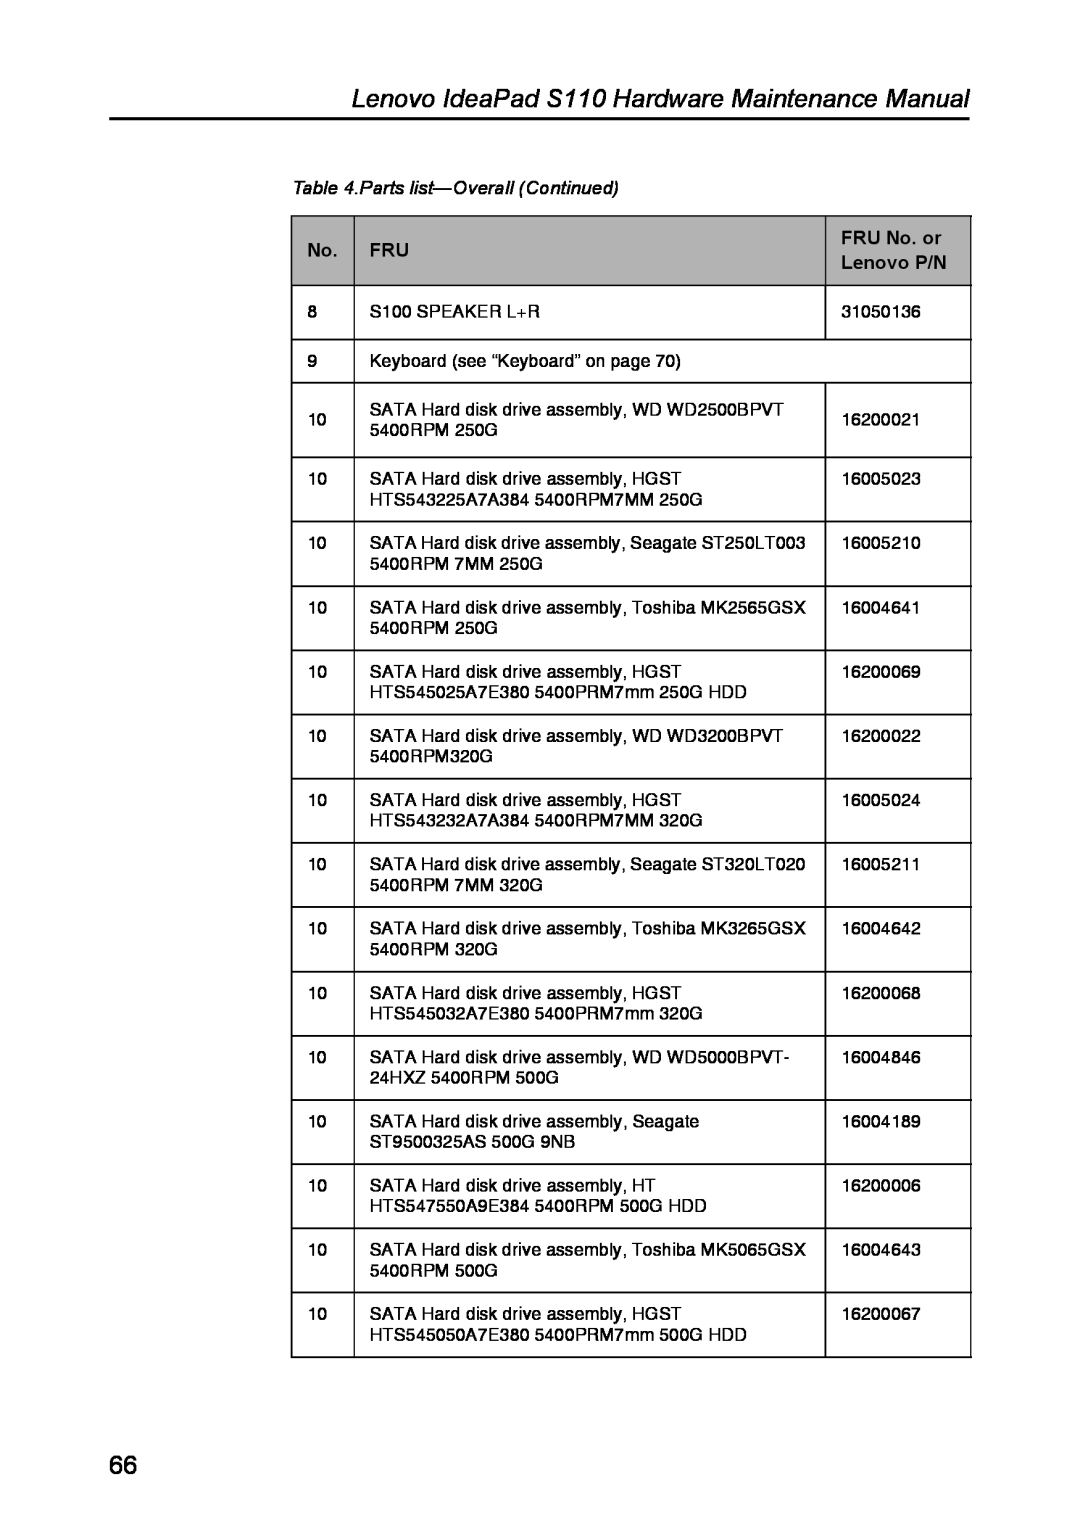 Lenovo manual Parts list-Overall Continued, Lenovo IdeaPad S110 Hardware Maintenance Manual, FRU No. or, Lenovo P/N 